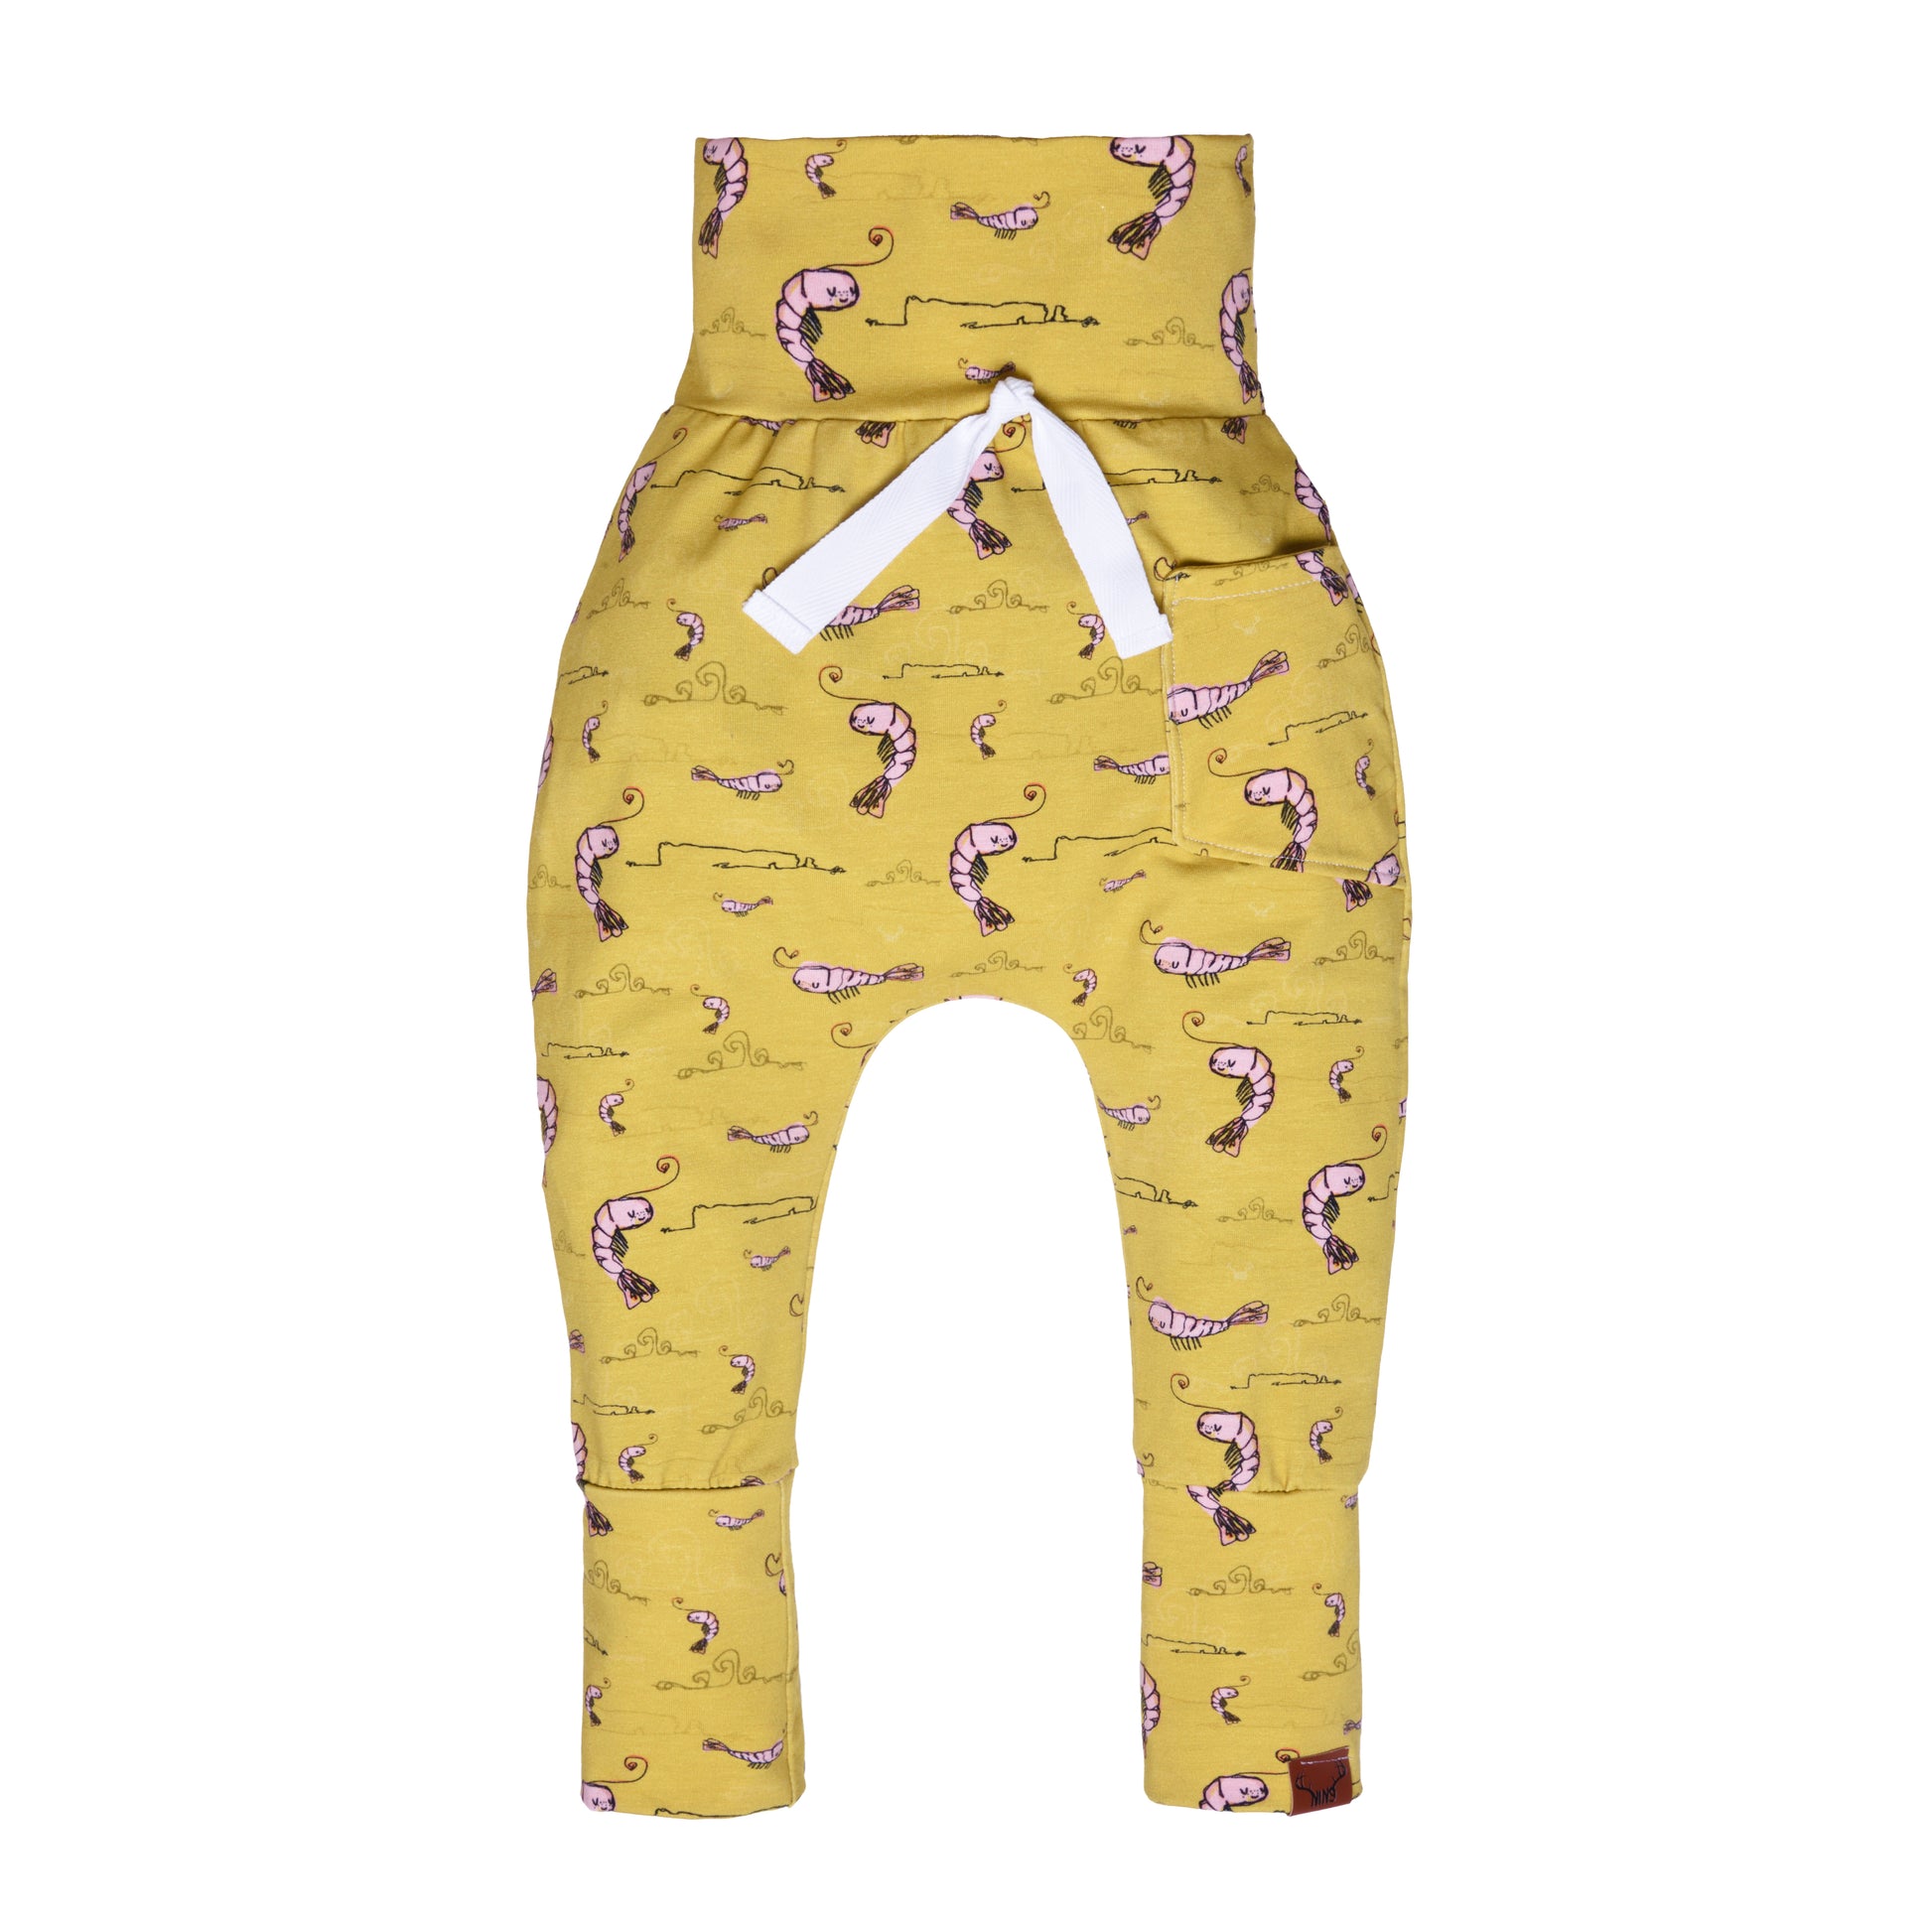 Pantalon évolutif jaune crevette rose - Grow with me pants yellow pink shrimp Nine Clothing